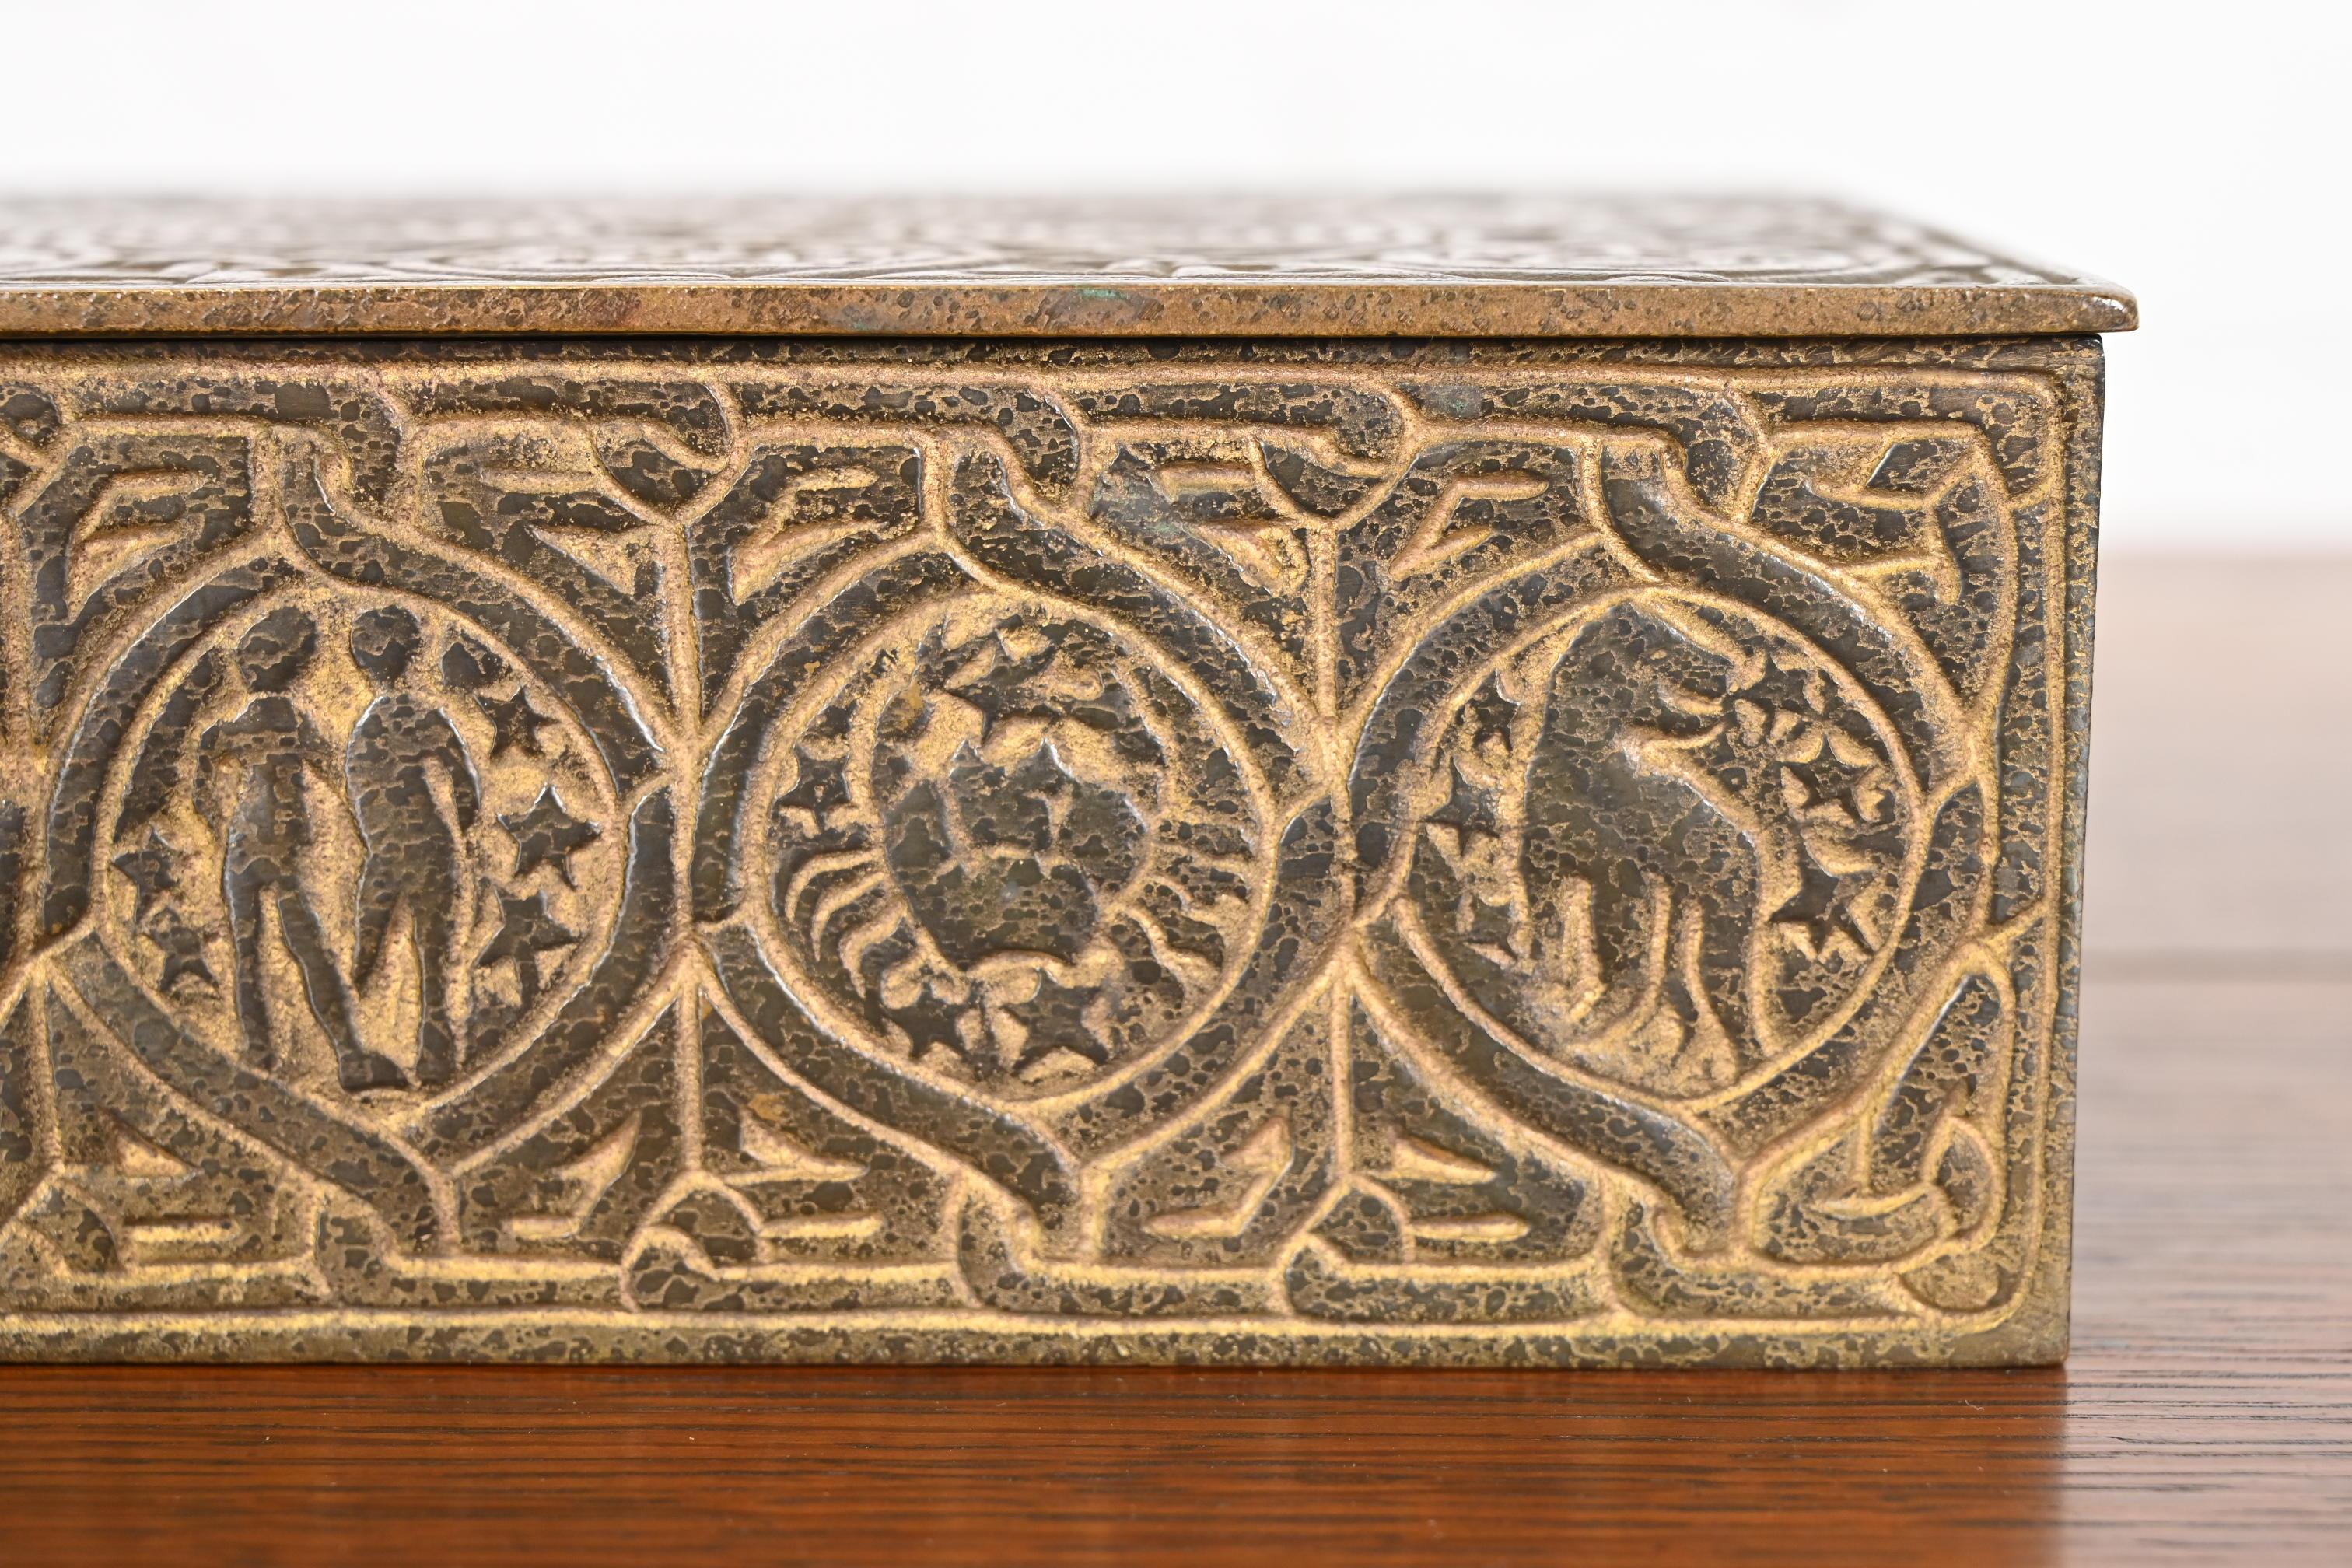 Tiffany Studios New York Zodiac Bronze Doré Cigar Box, Circa 1910 For Sale 4